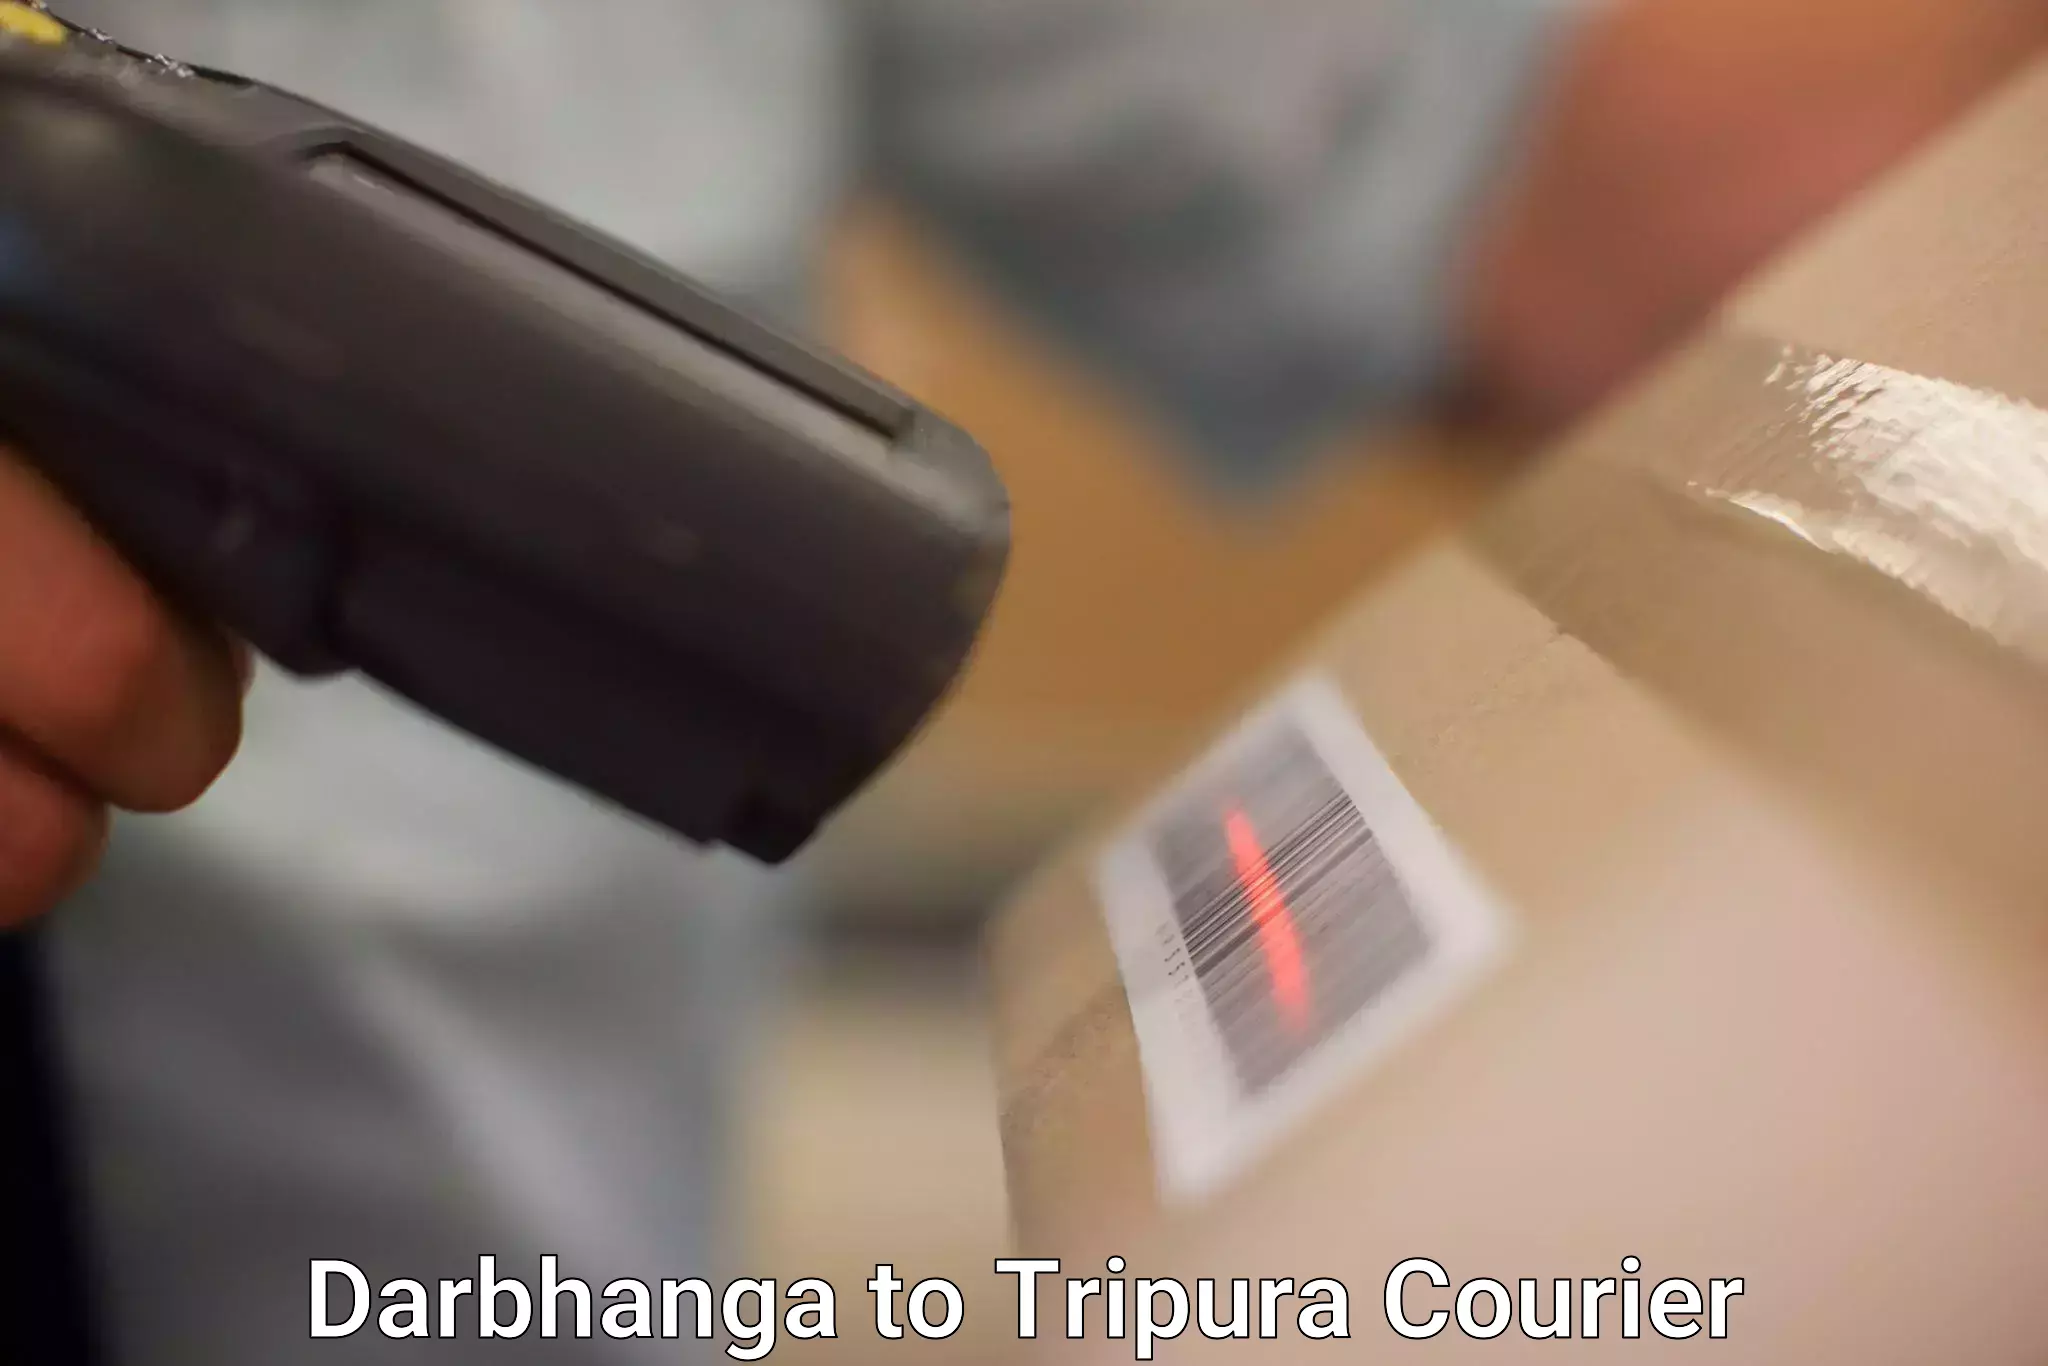 Courier insurance Darbhanga to Udaipur Tripura